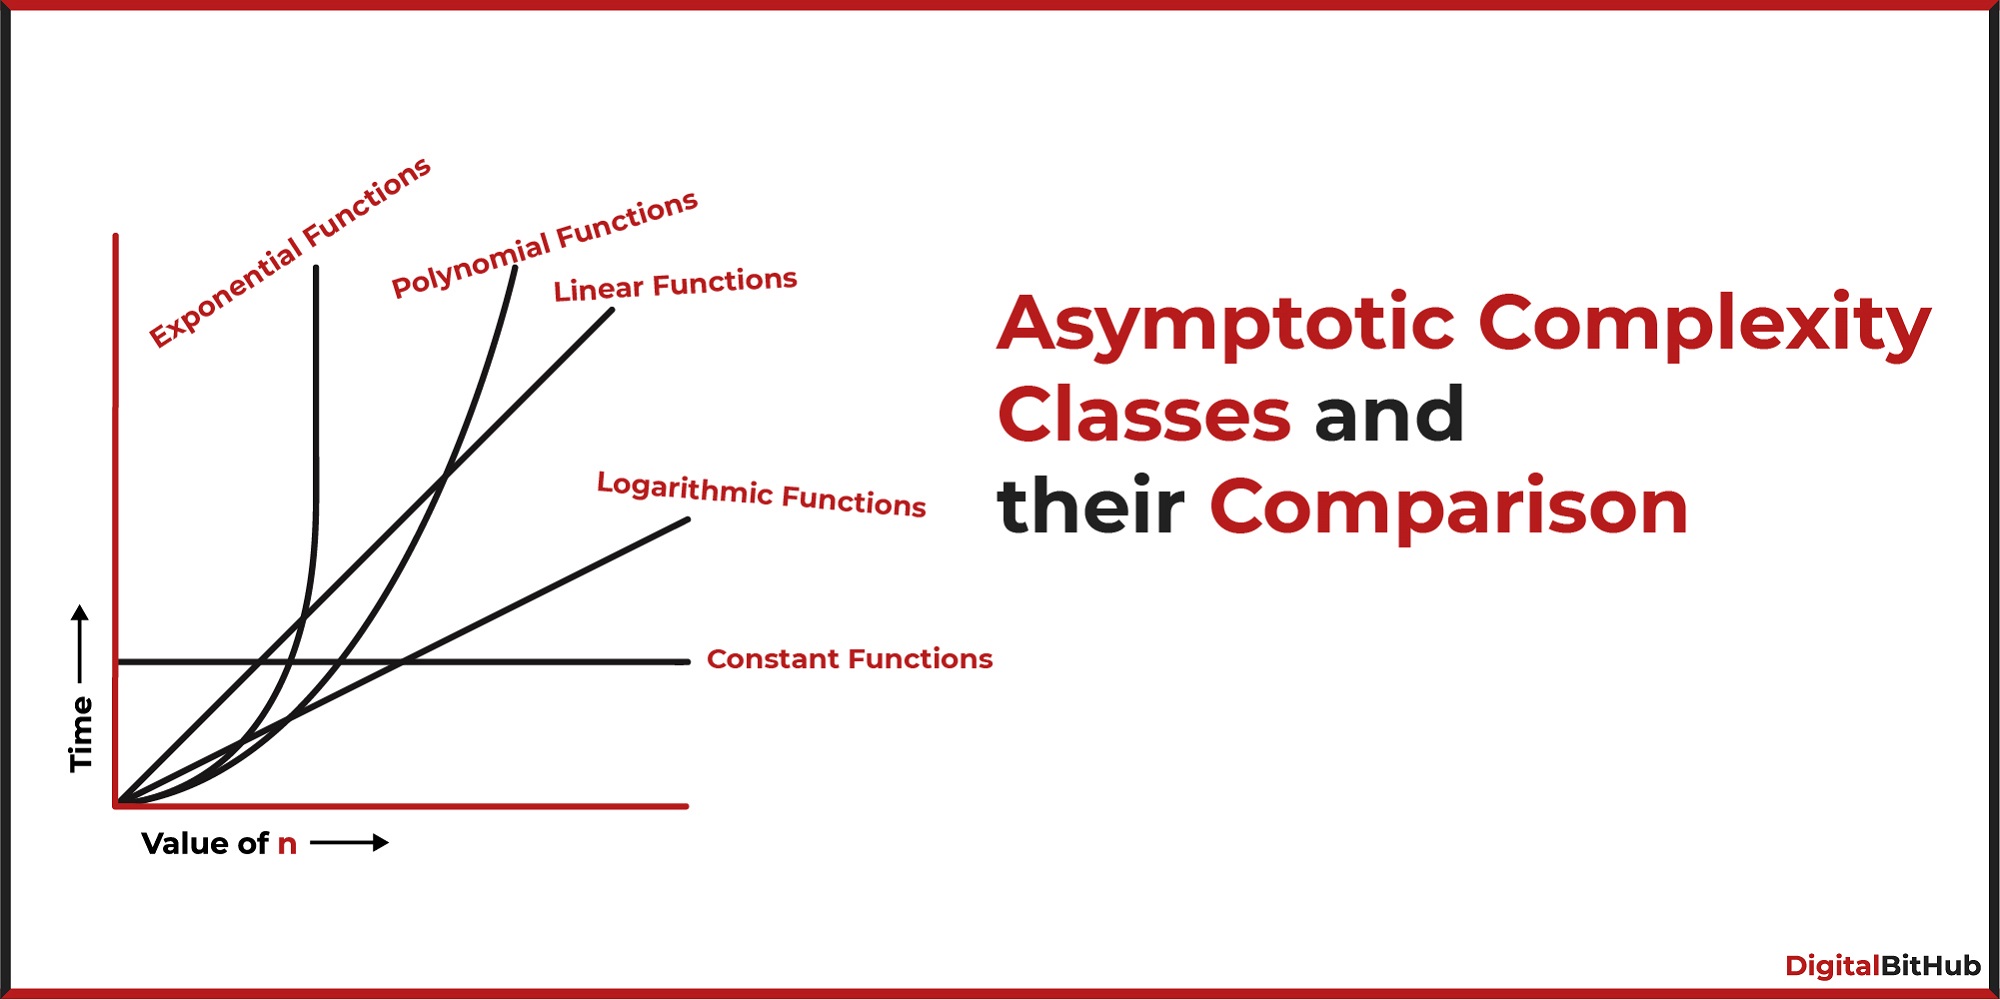 Asymptotic Complexity Classes and Comparison